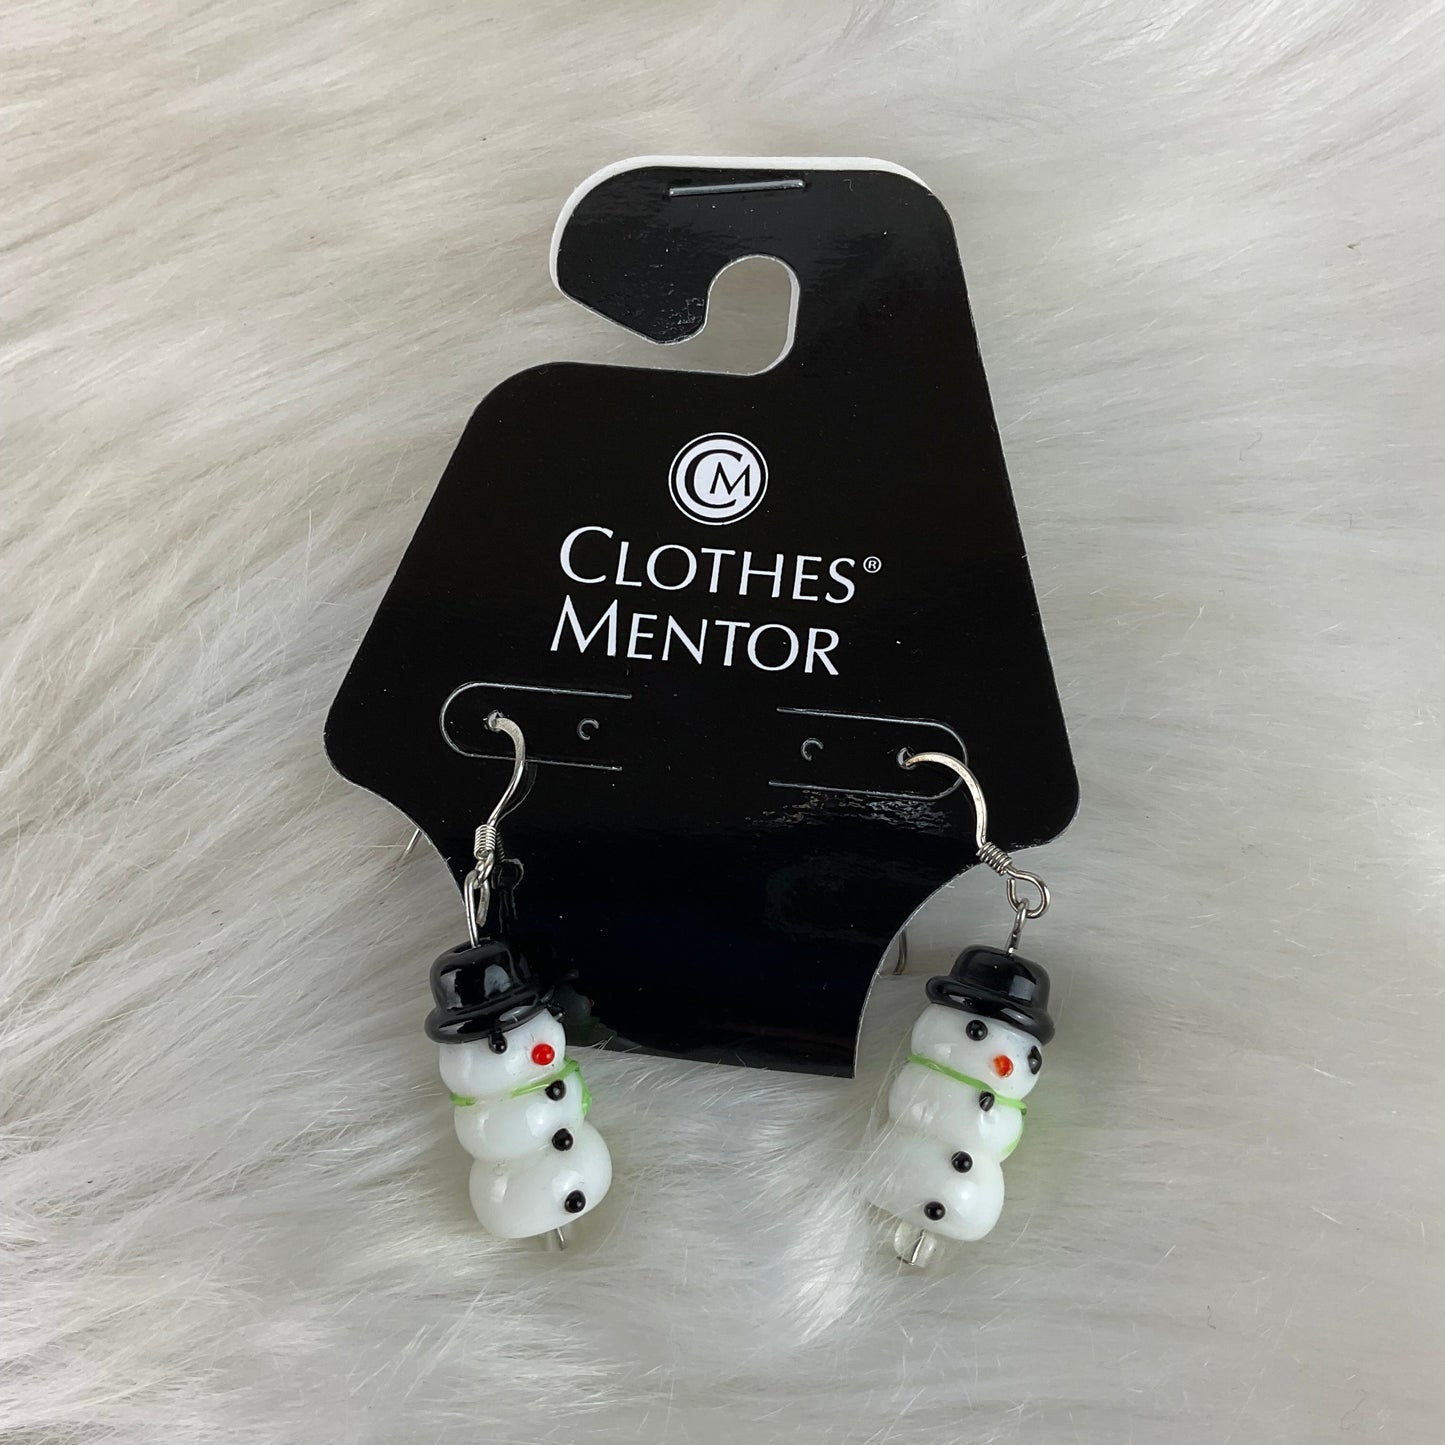 Earrings Dangle/drop Clothes Mentor